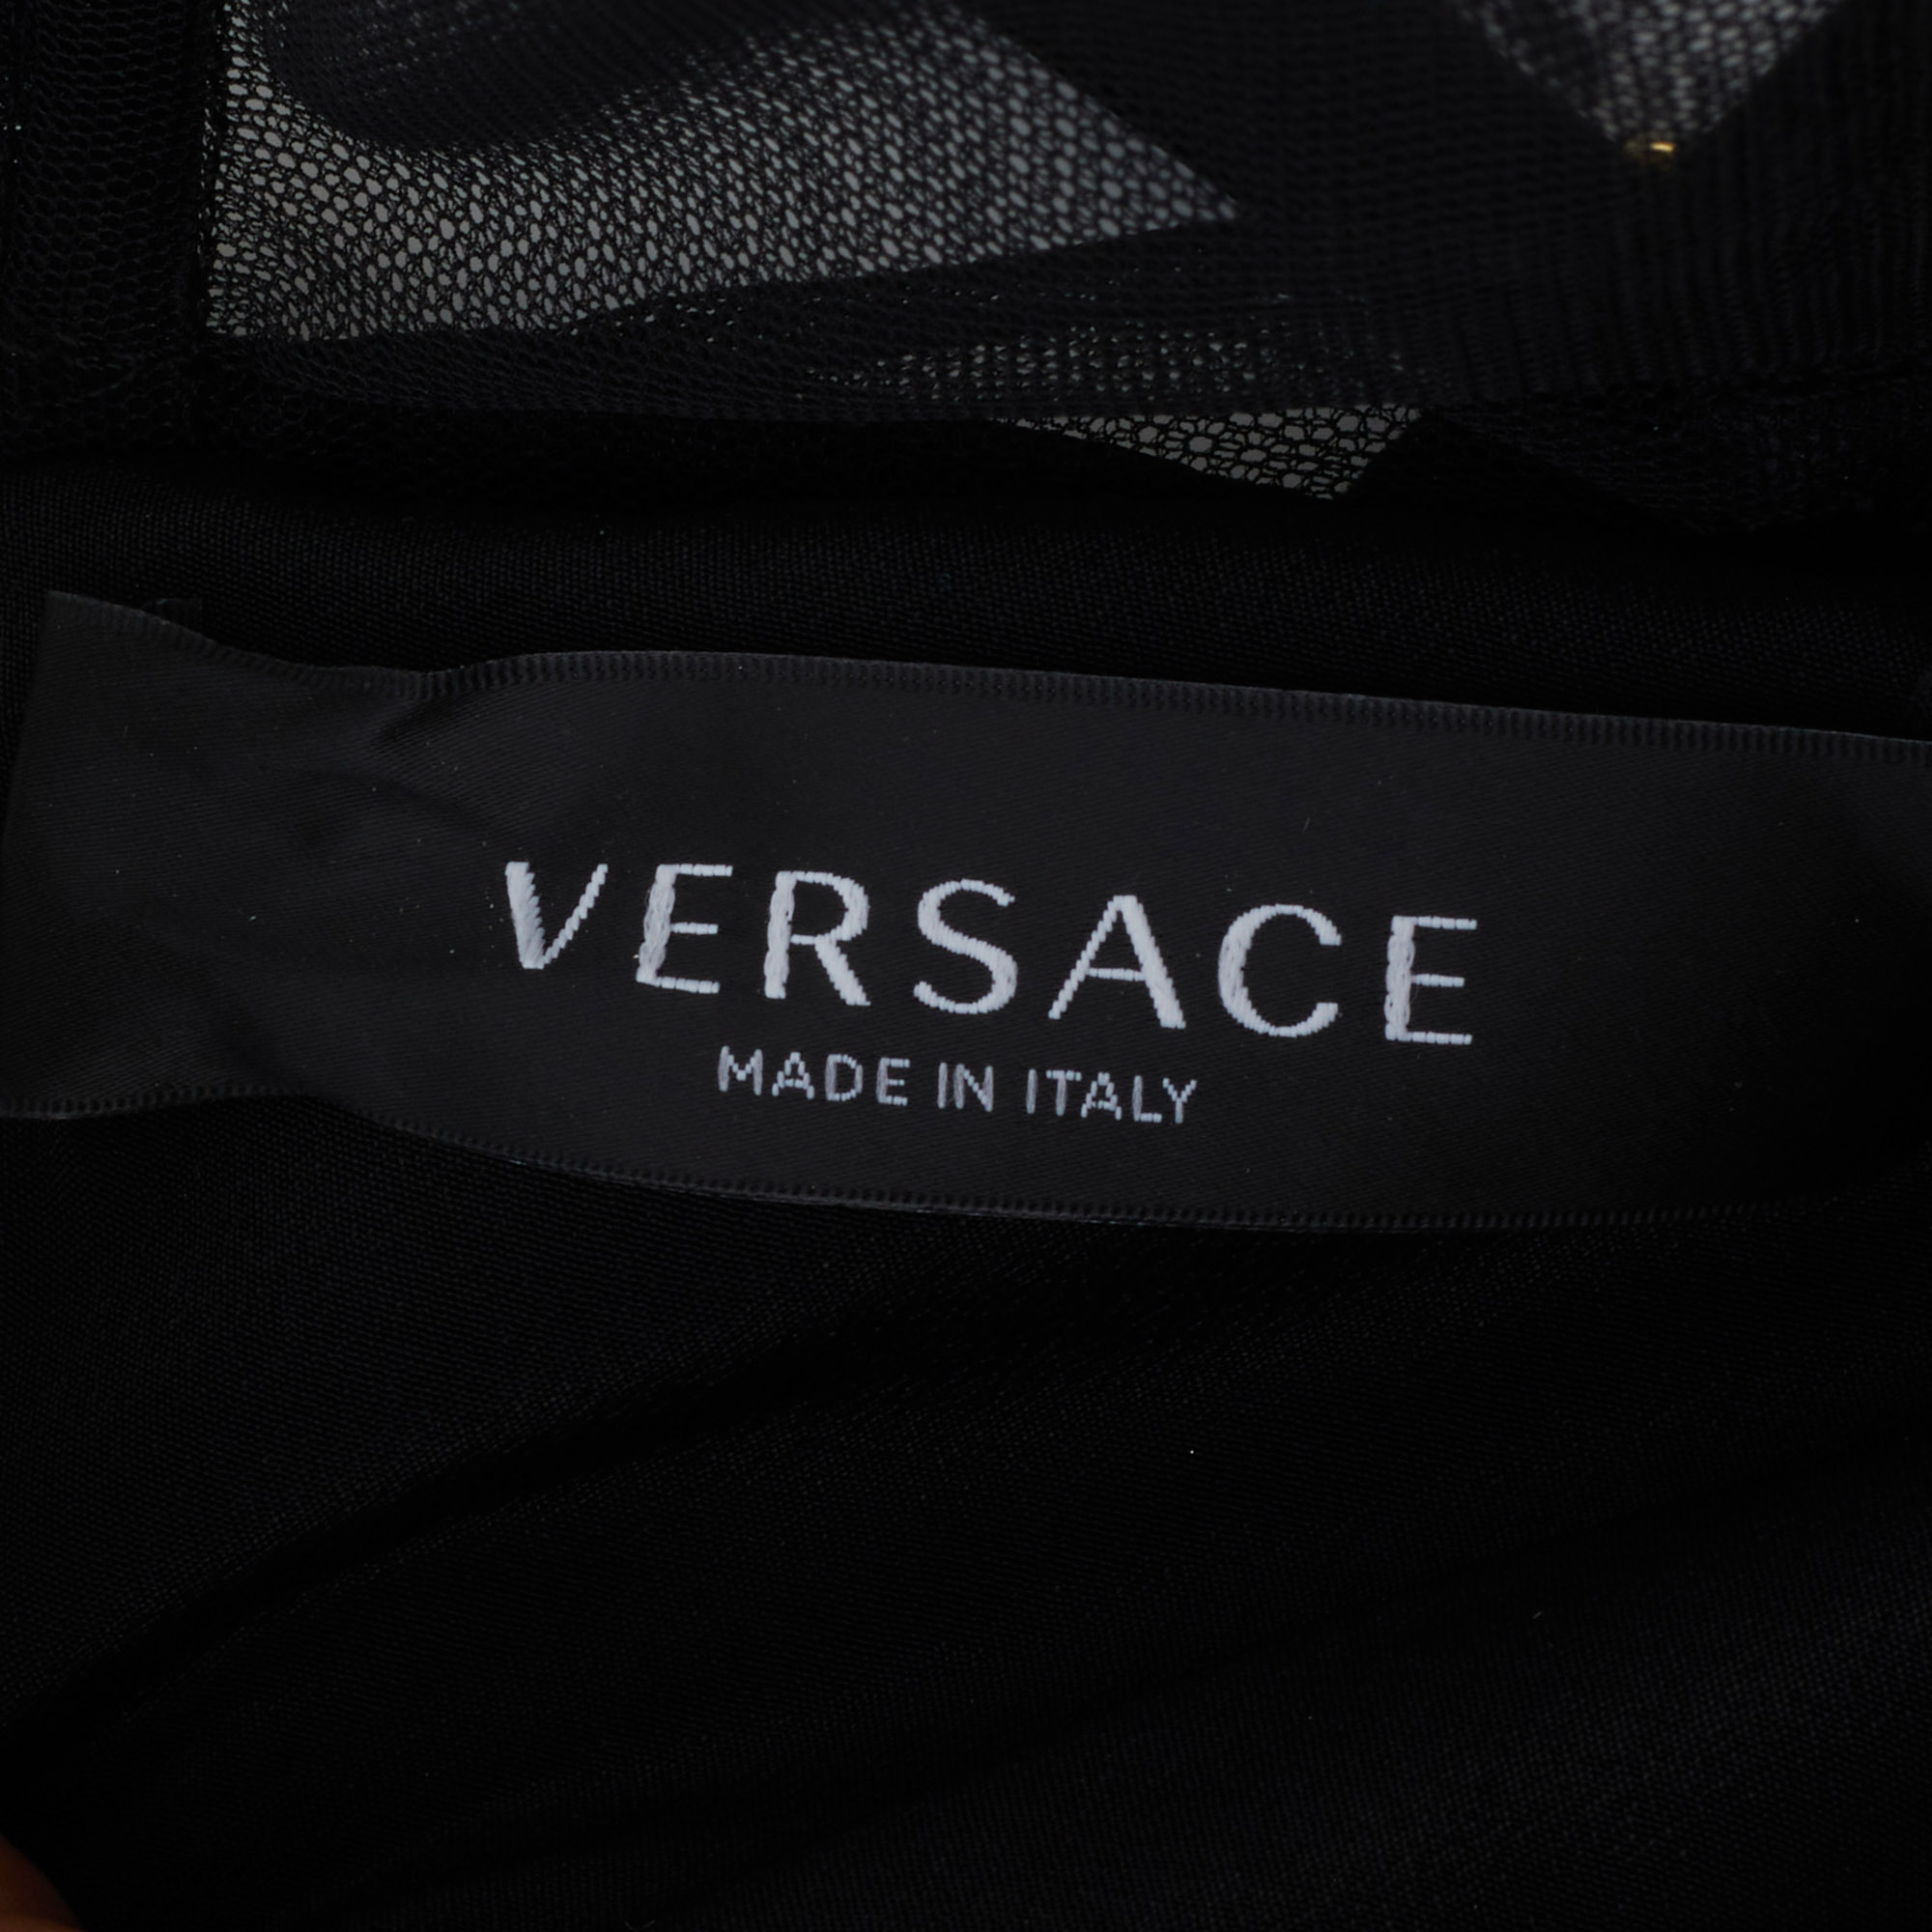 Versace Black Silk Crepe Crystal Embellished Strap Gown M